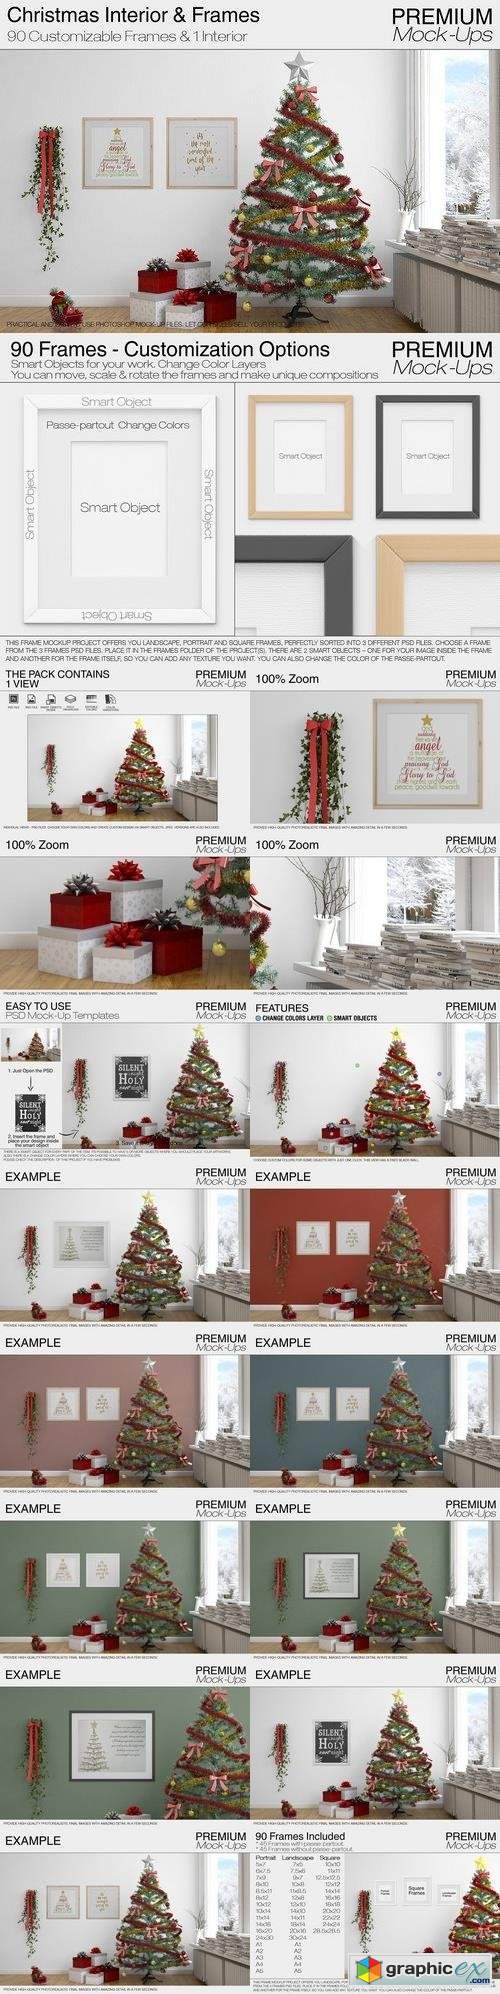 Christmas Interior & Frames Pack